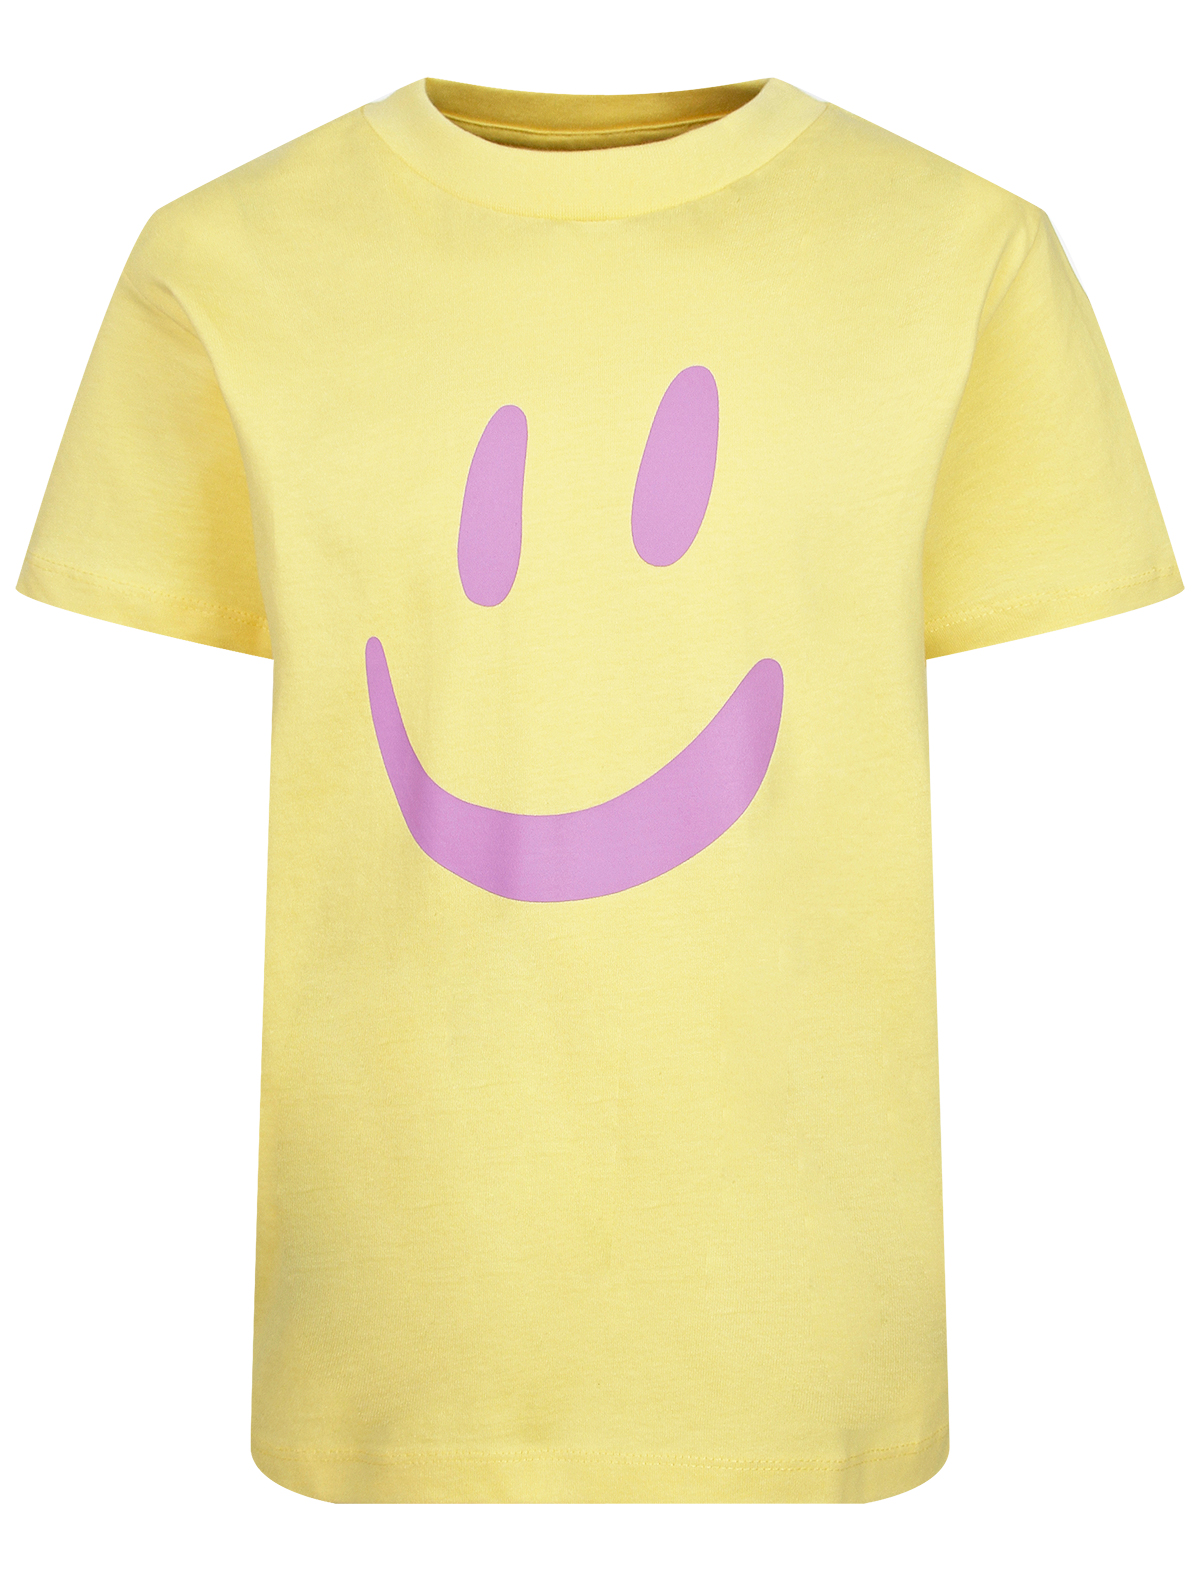 футболка molo для мальчика, желтая